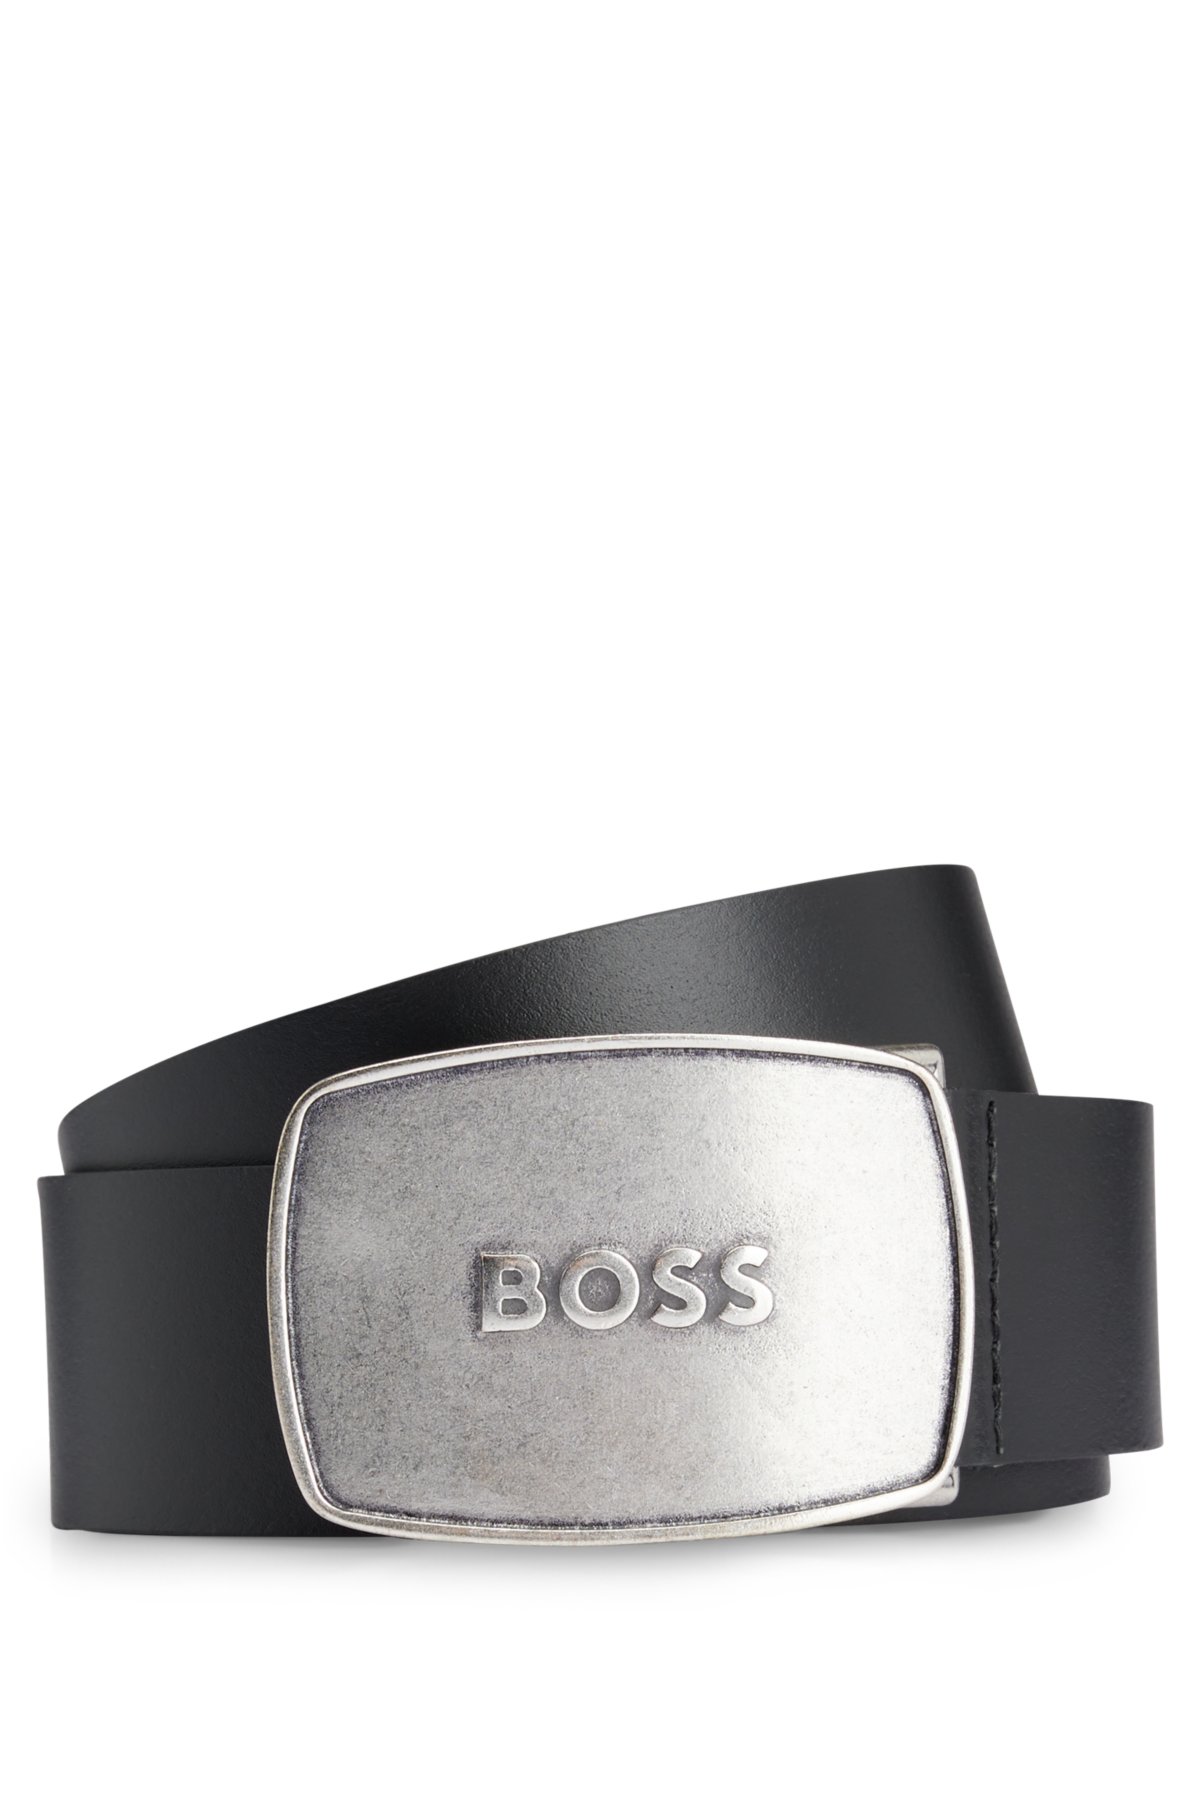 BOSS - gebürstetem Logo-Koppelschließe aus Ledergürtel Metall mit